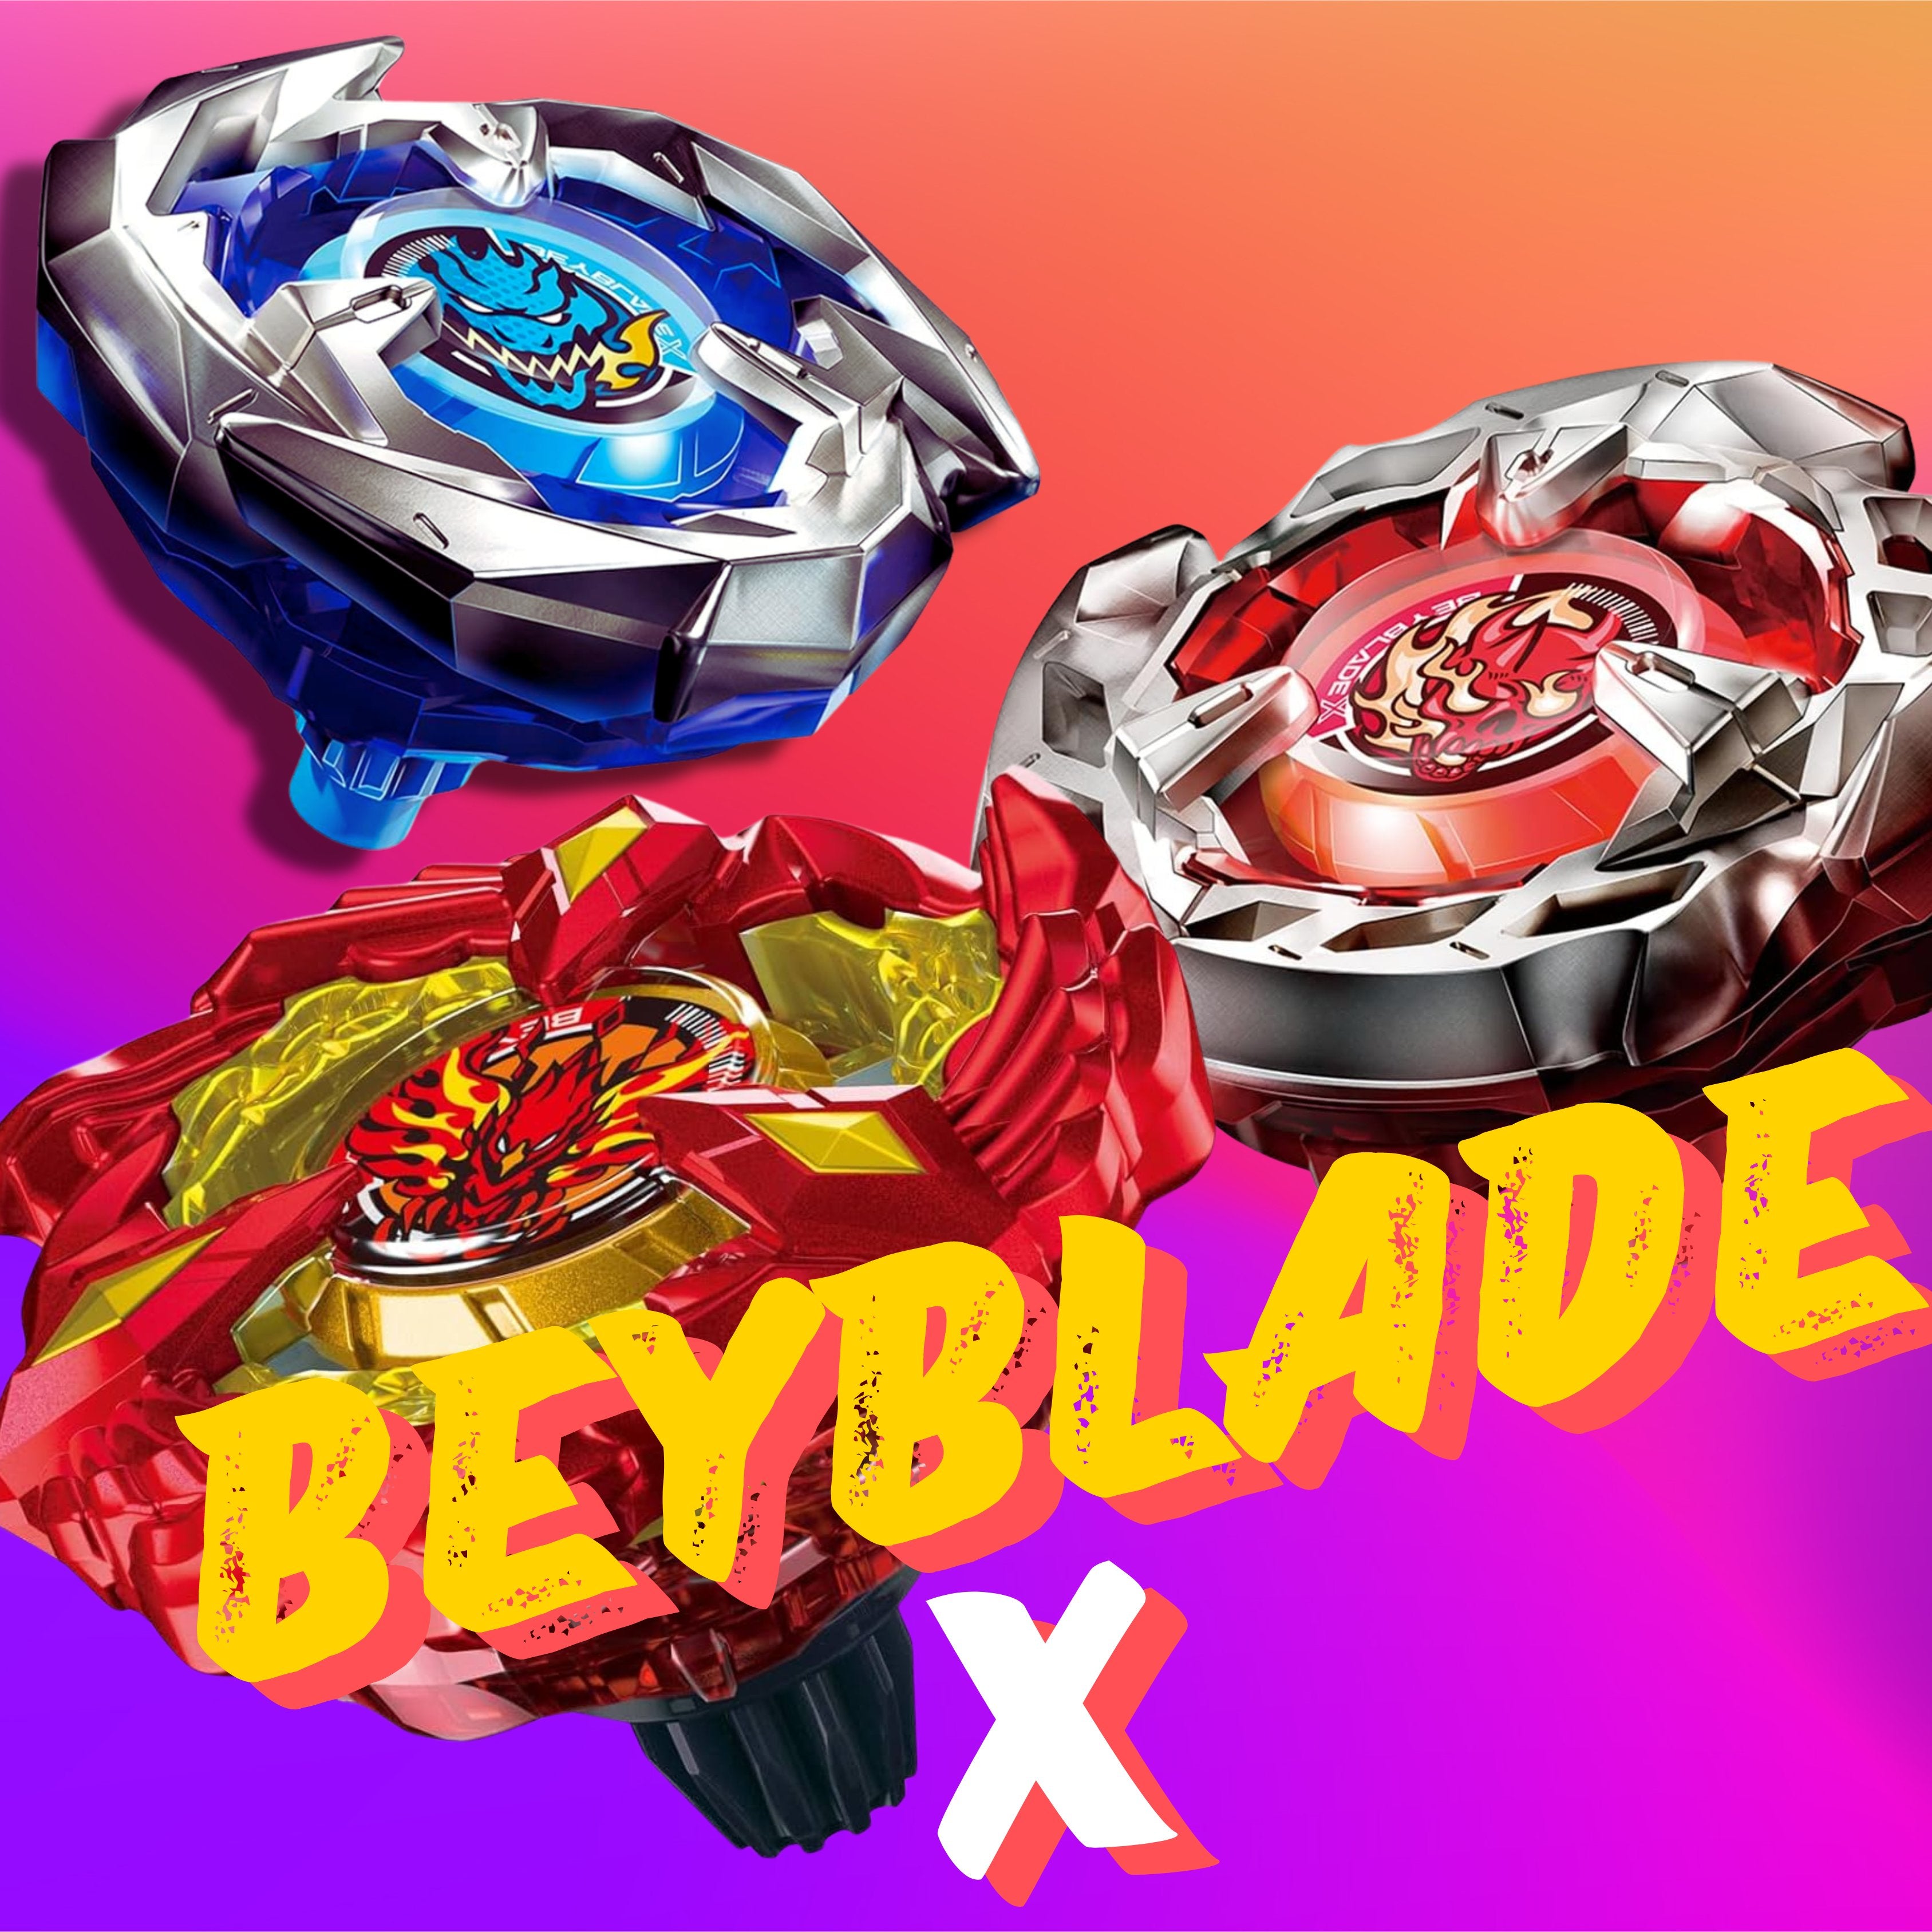 Beyblade X Beyblade X BX-04 Starter Night Shield 3-80N